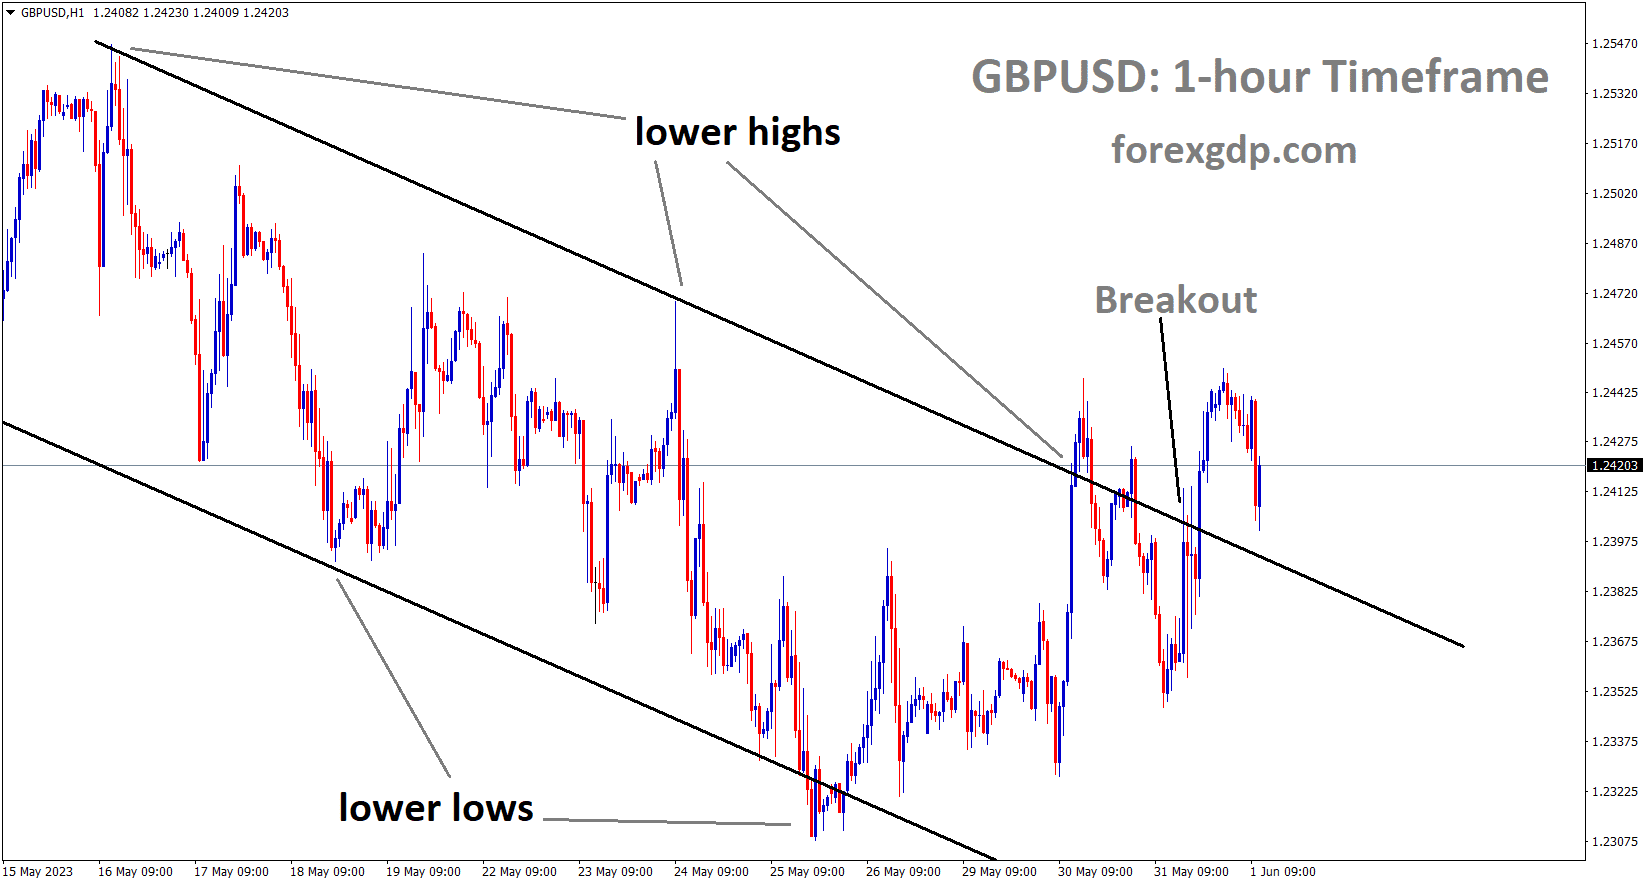 GBPUSD has broken the Descending channel in upside